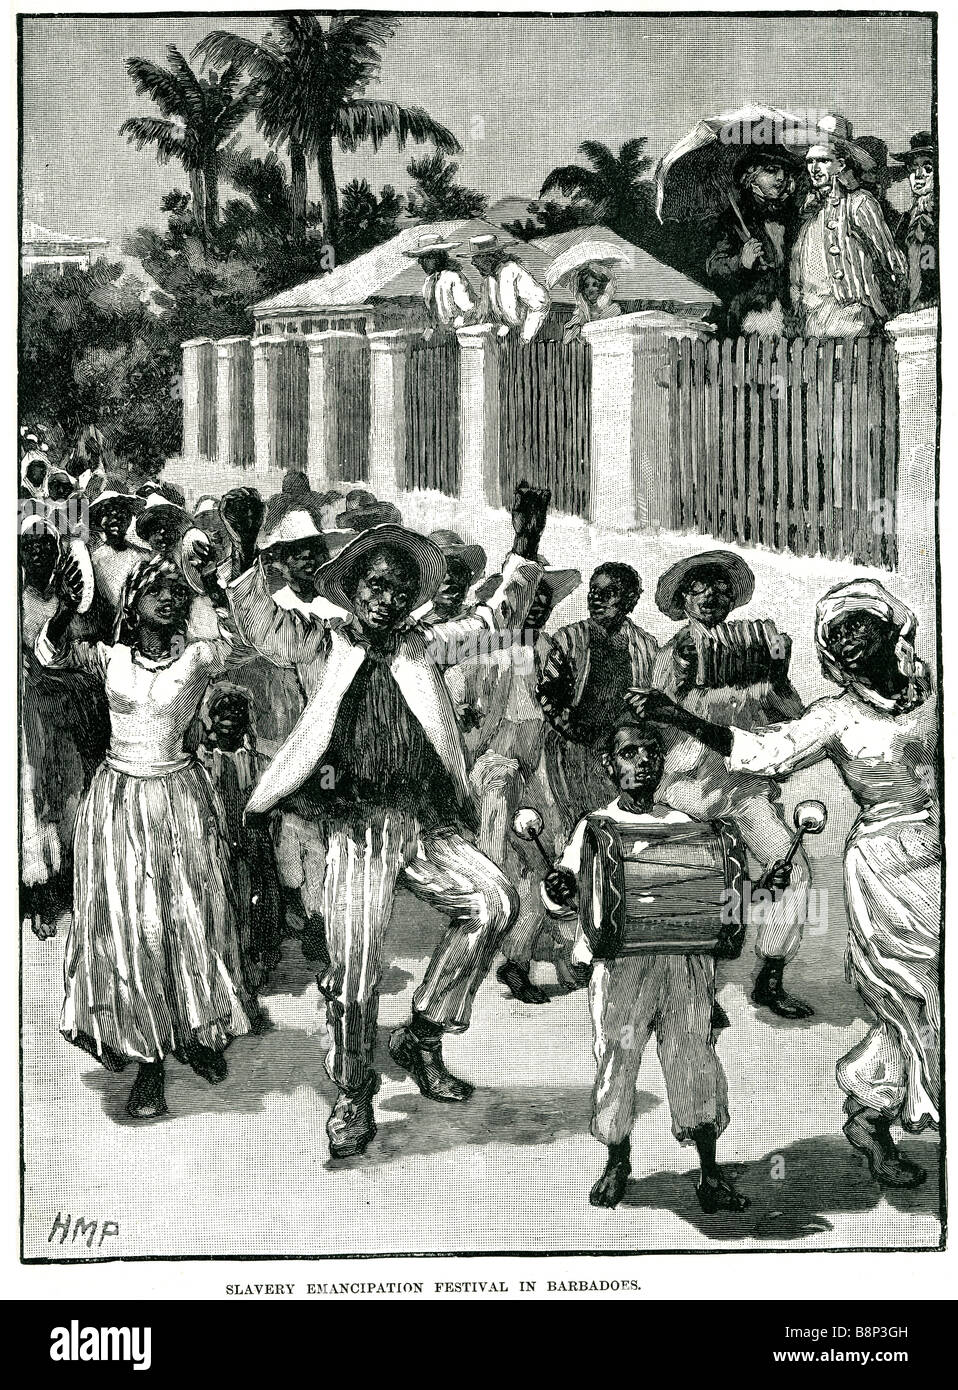 slavery emancipation festival in barbadoes slave 1834 Stock Photo